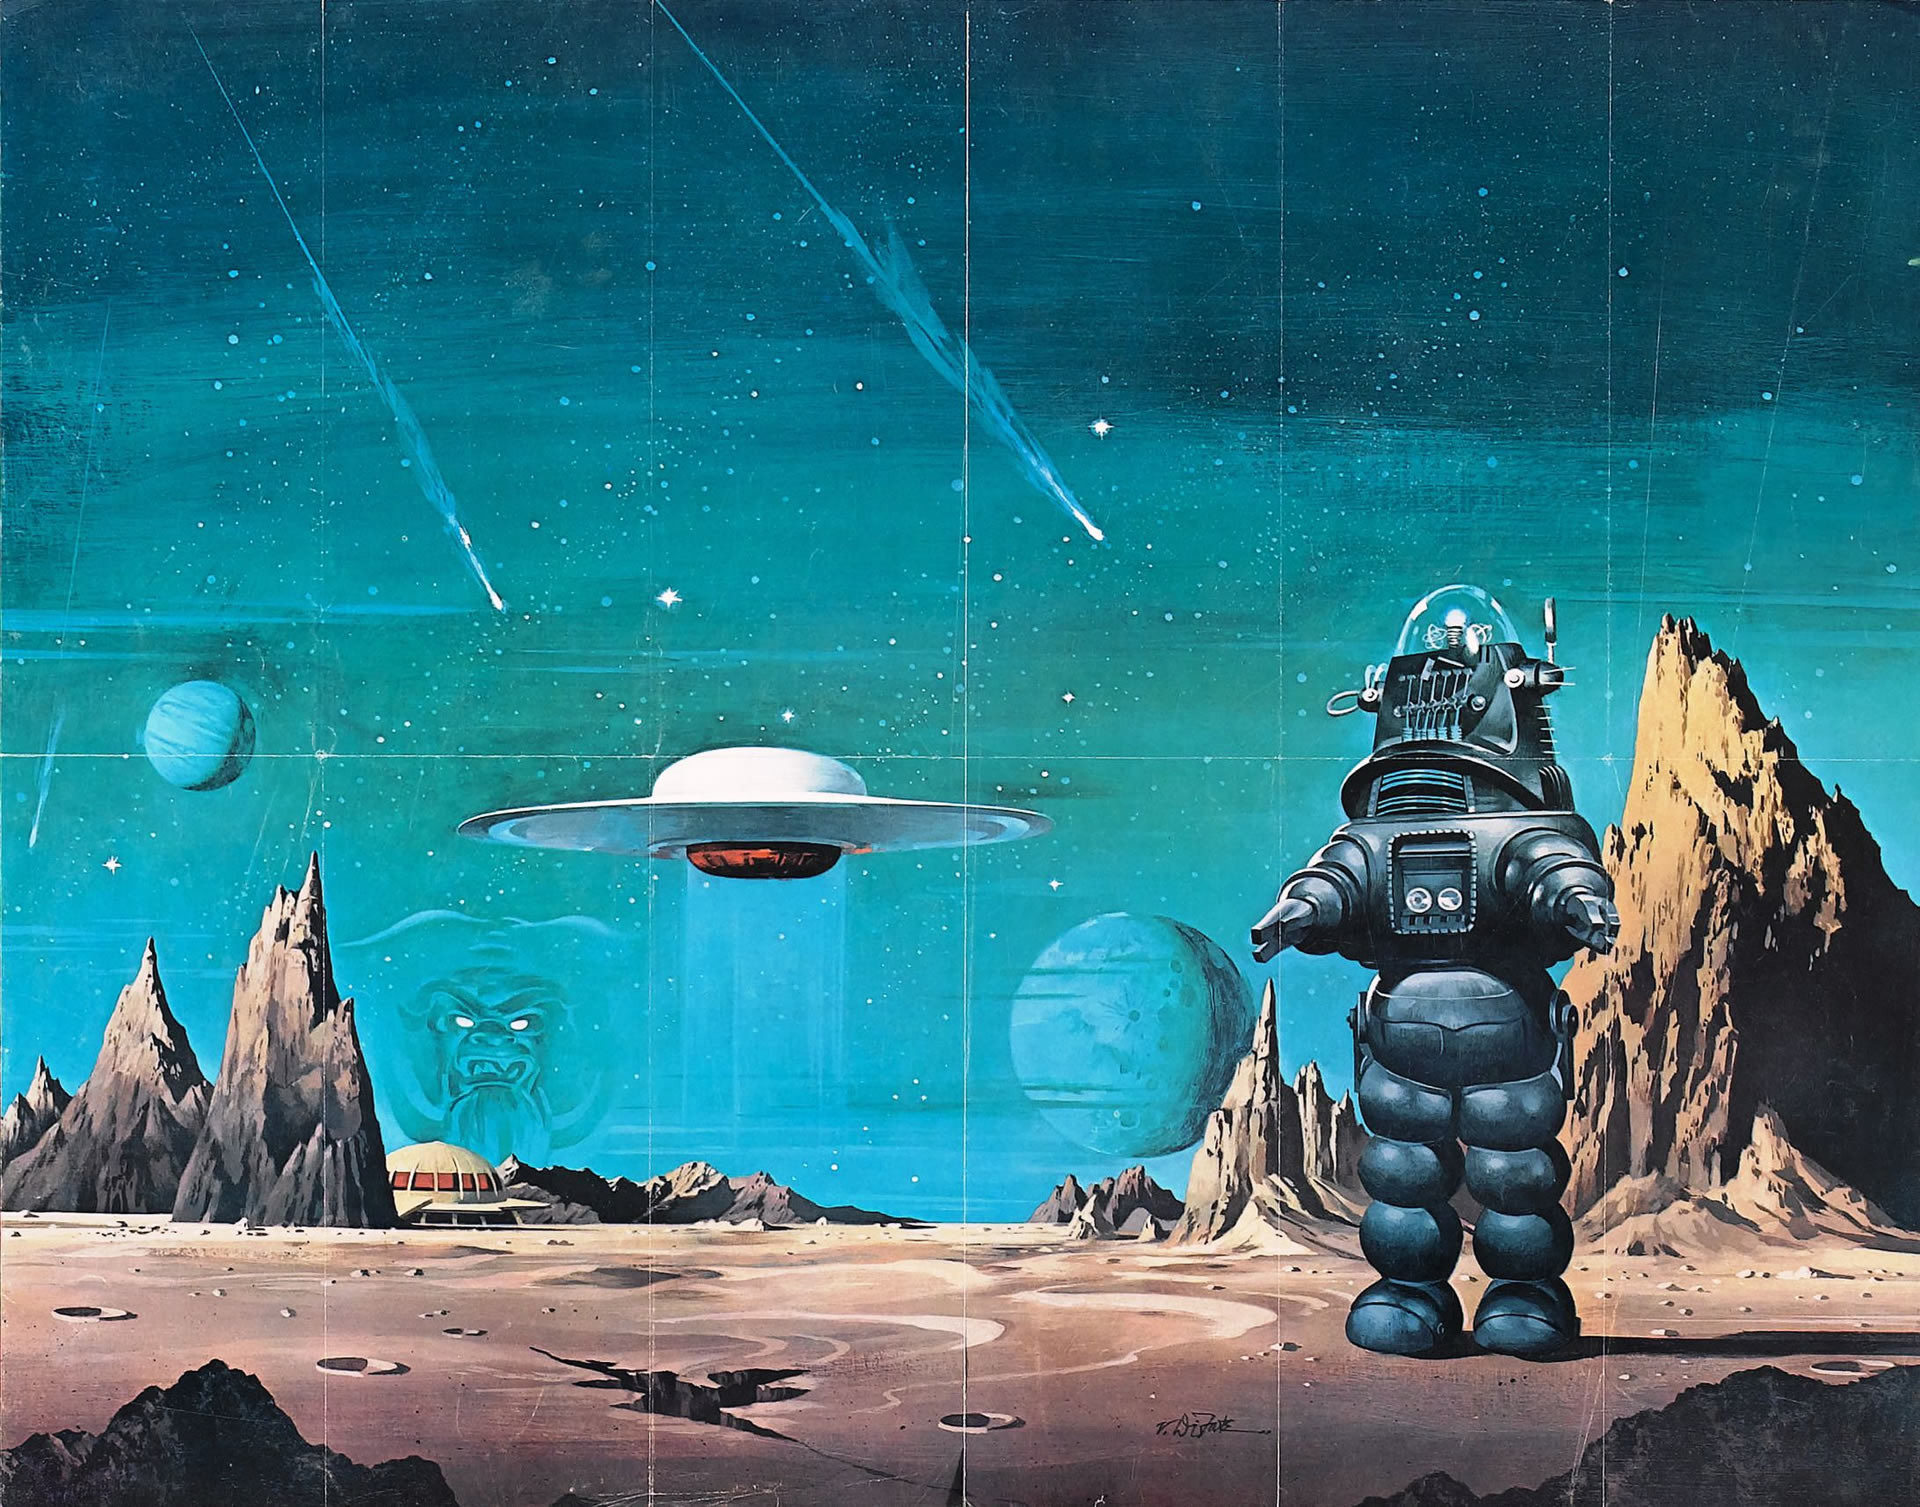 Some retro sci fi wallpaper for you guys